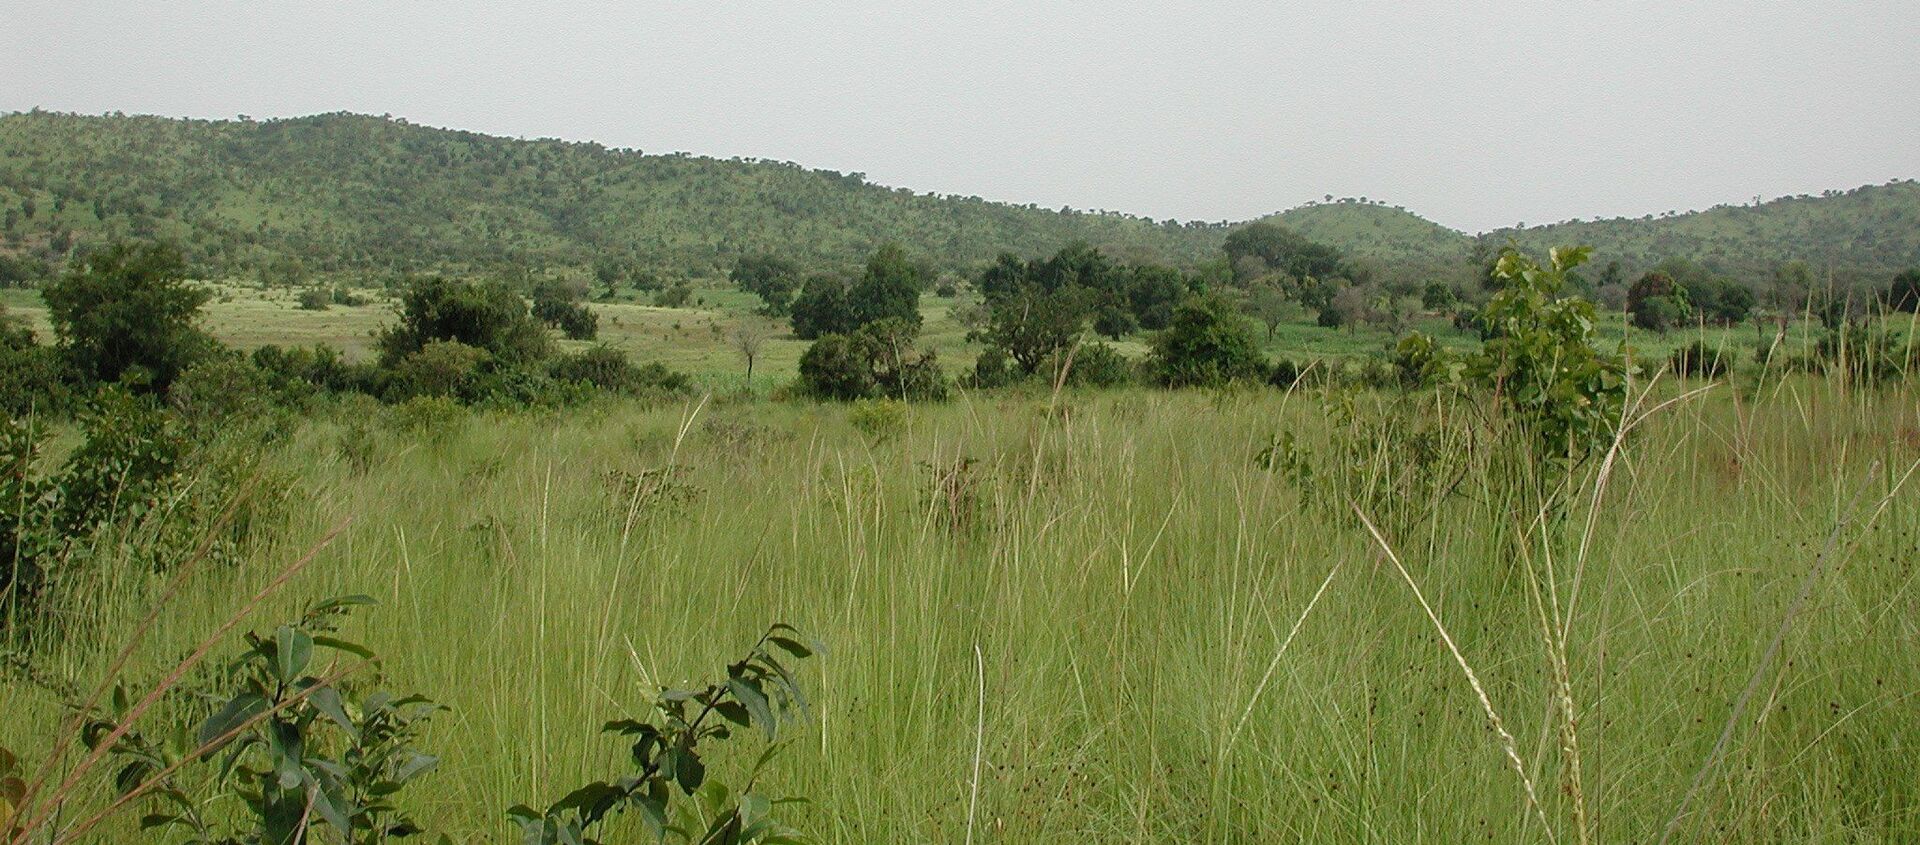 Sahel savanna in SW Burkina Faso, near Gbomblora on the road from Gaoua to Batié. - Sputnik Afrique, 1920, 09.03.2020